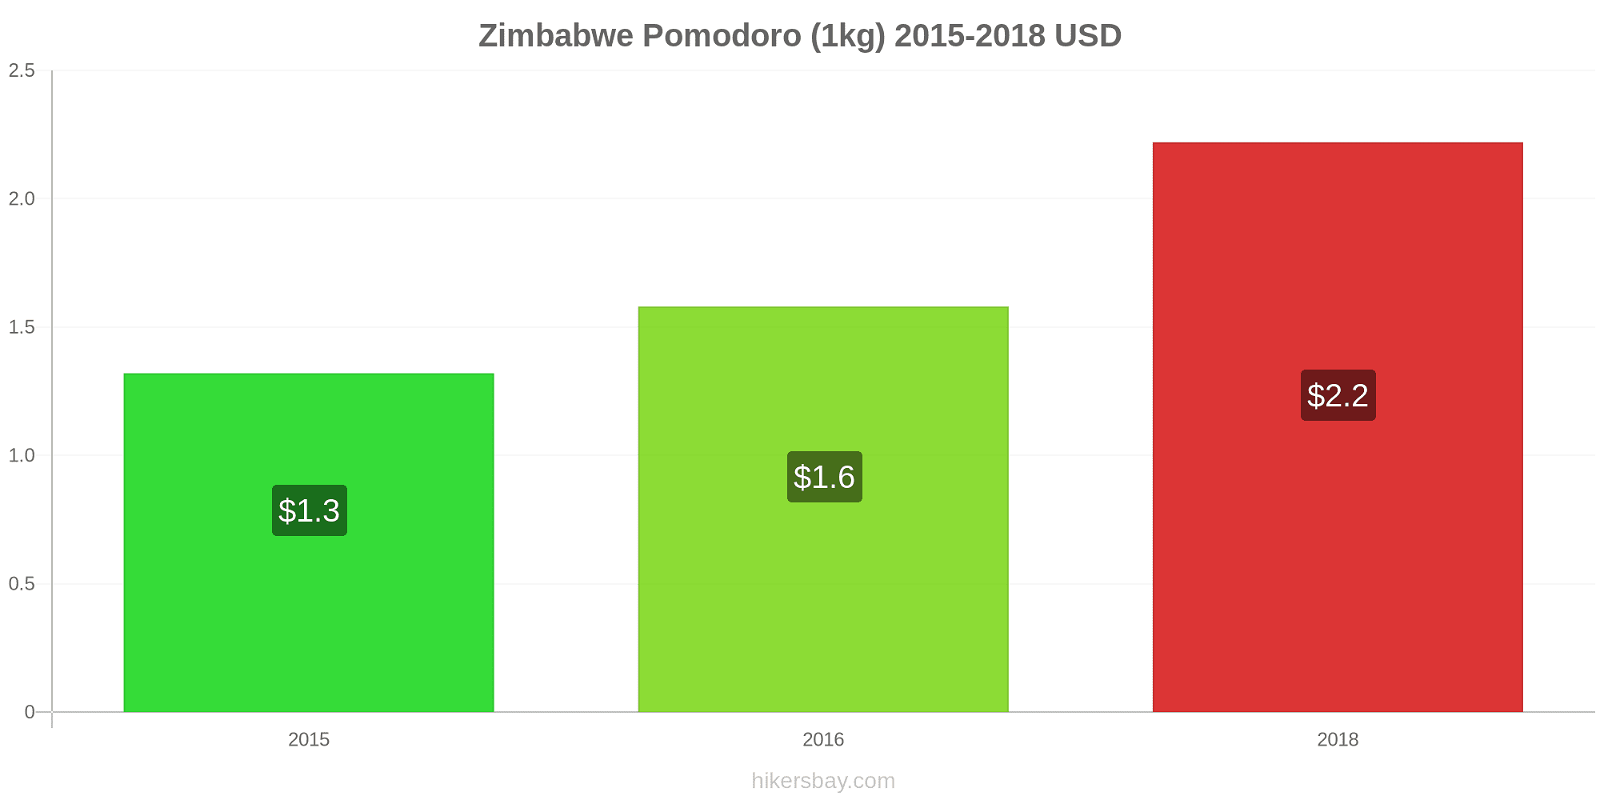 Zimbabwe variazioni di prezzo Pomodoro (1kg) hikersbay.com